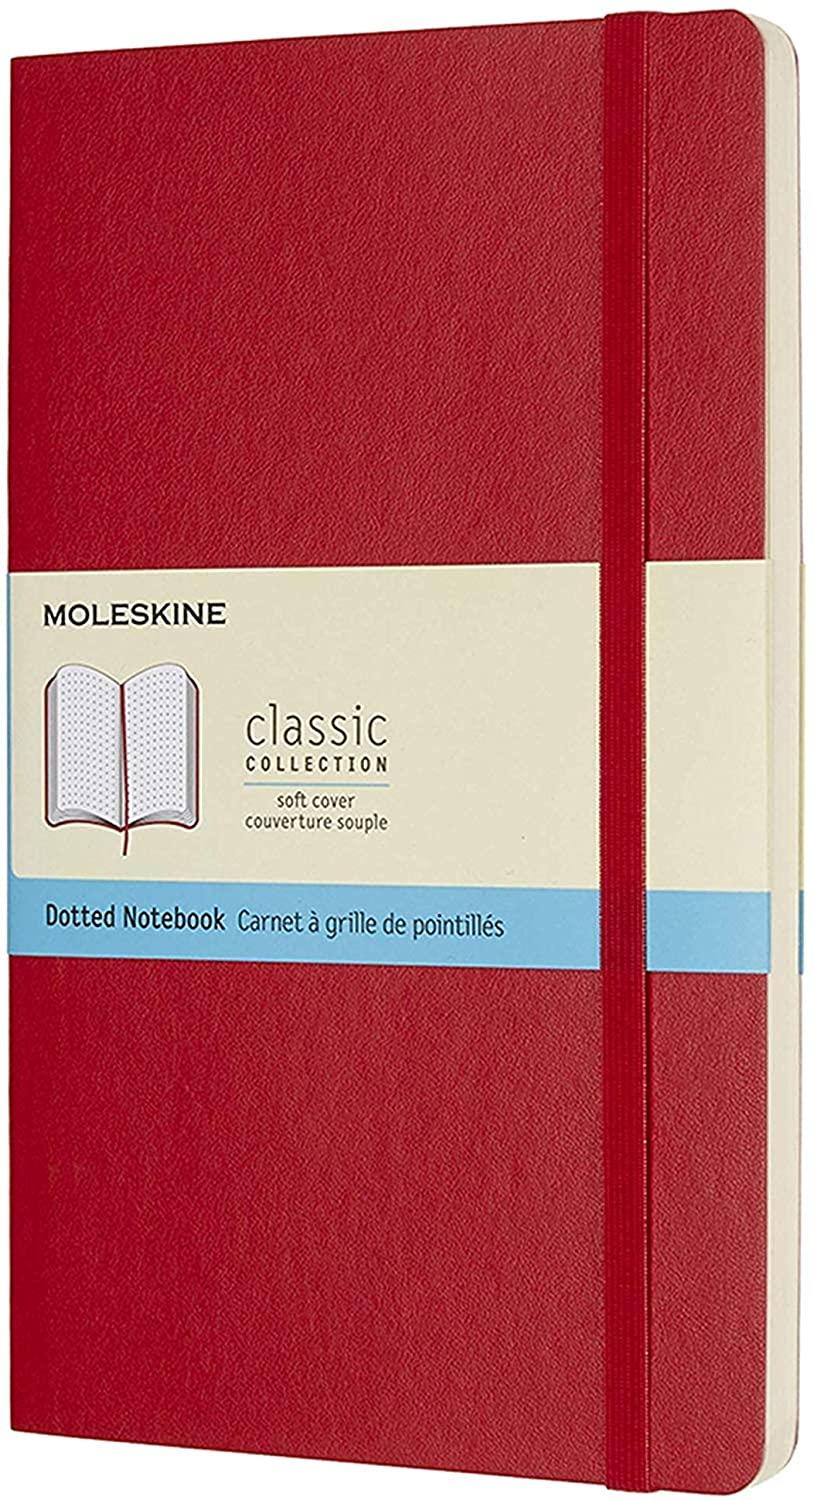 Moleskine Notebook Large Dotted, Scarlet Red